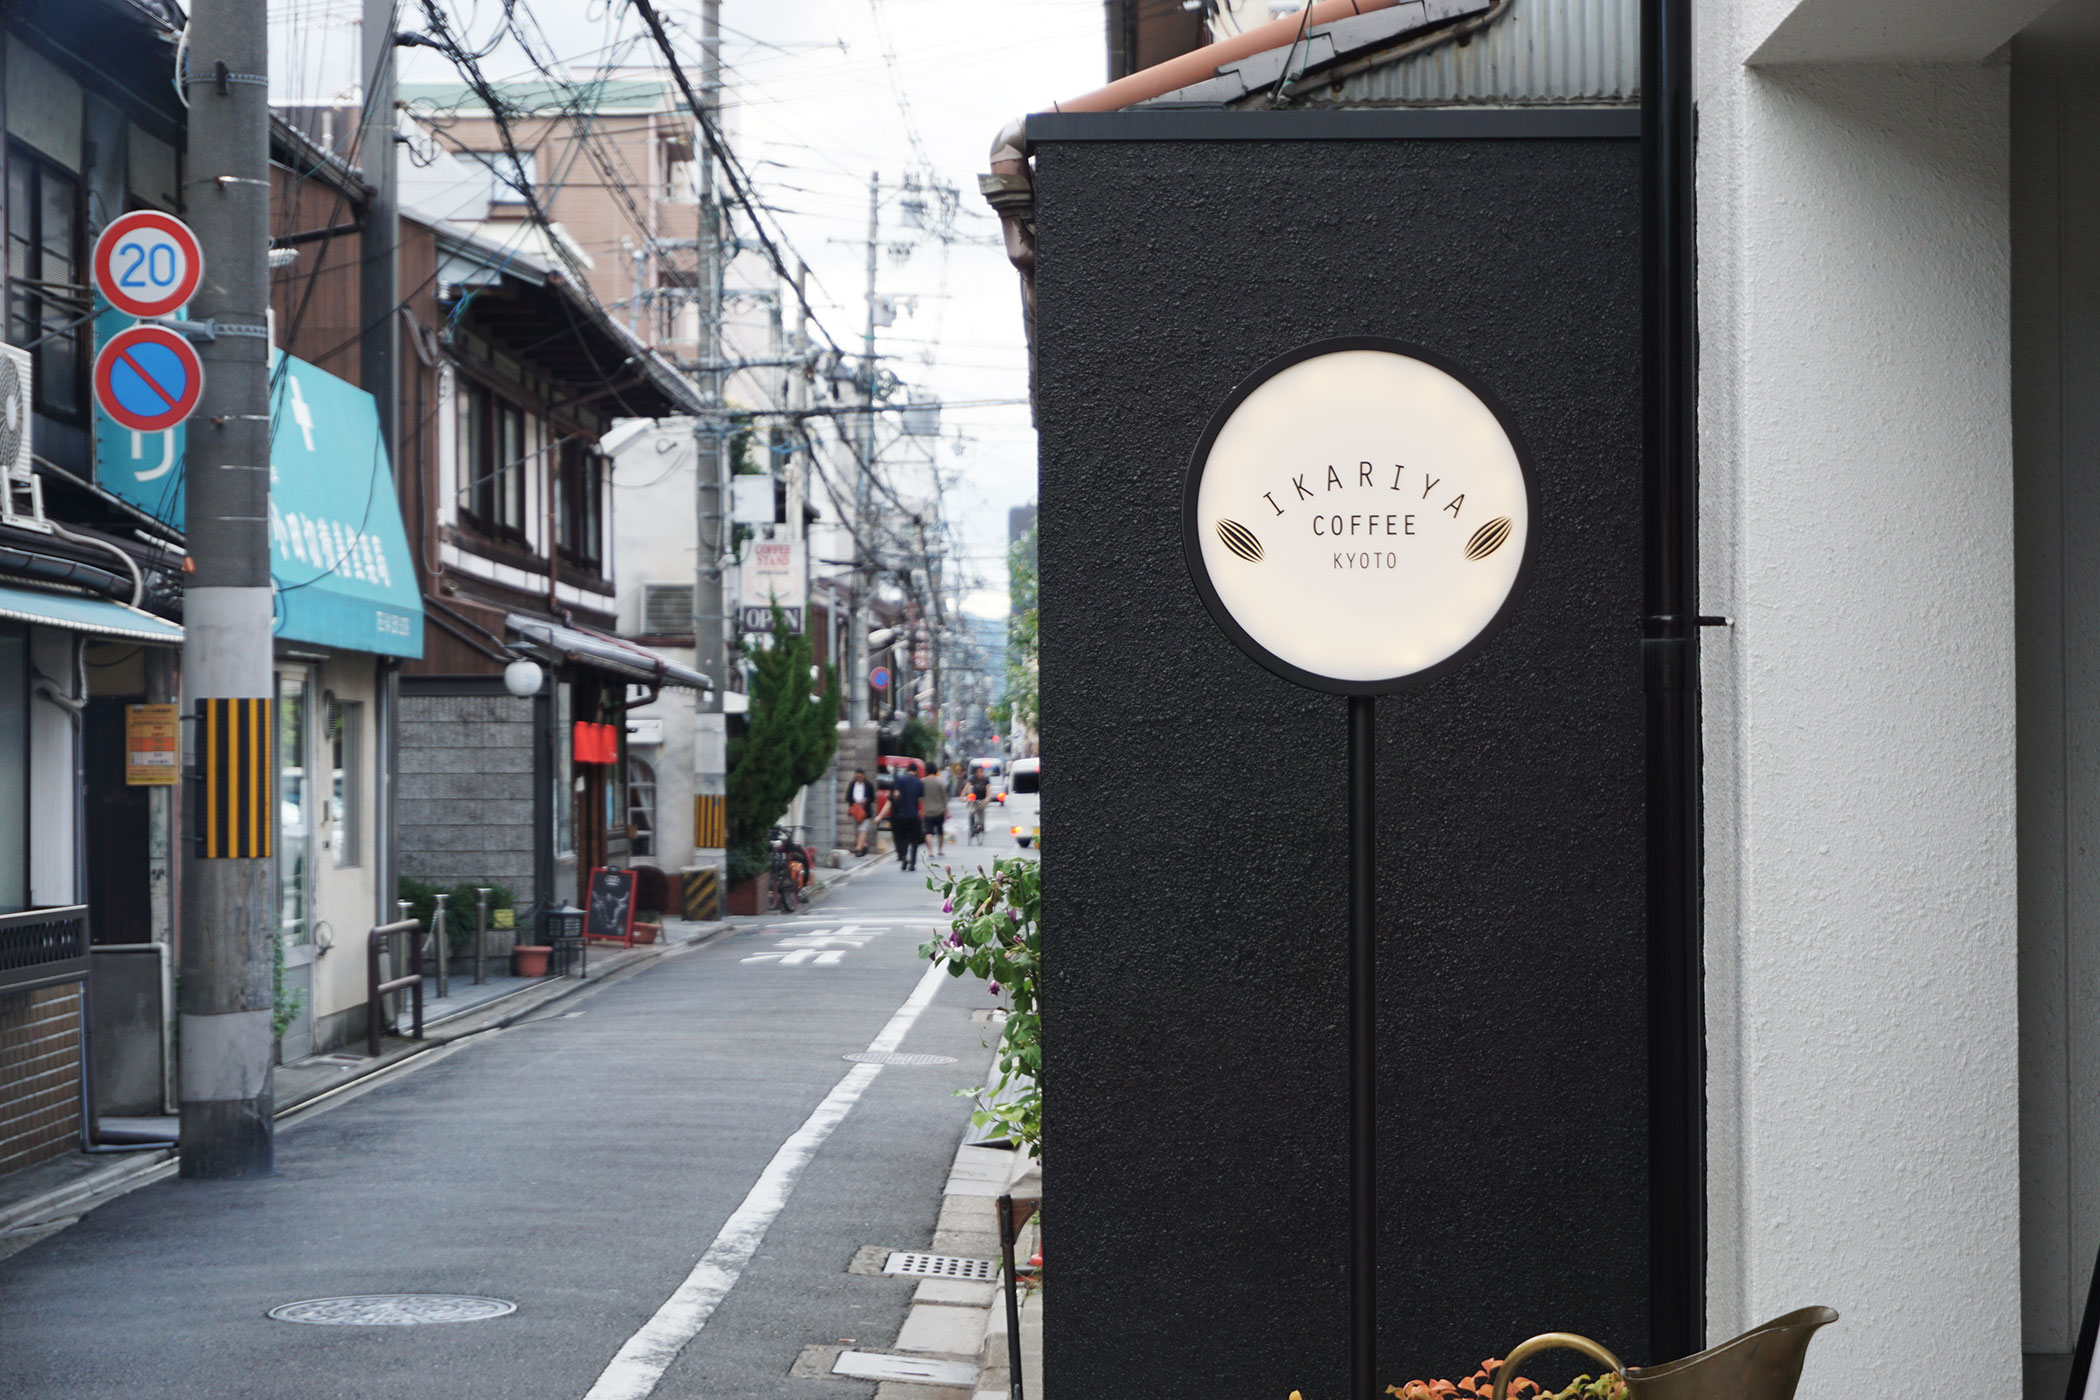 IKARIYA COFFEE KYOTO 京都の人気グループによるコーヒーショップ - 京都・四条